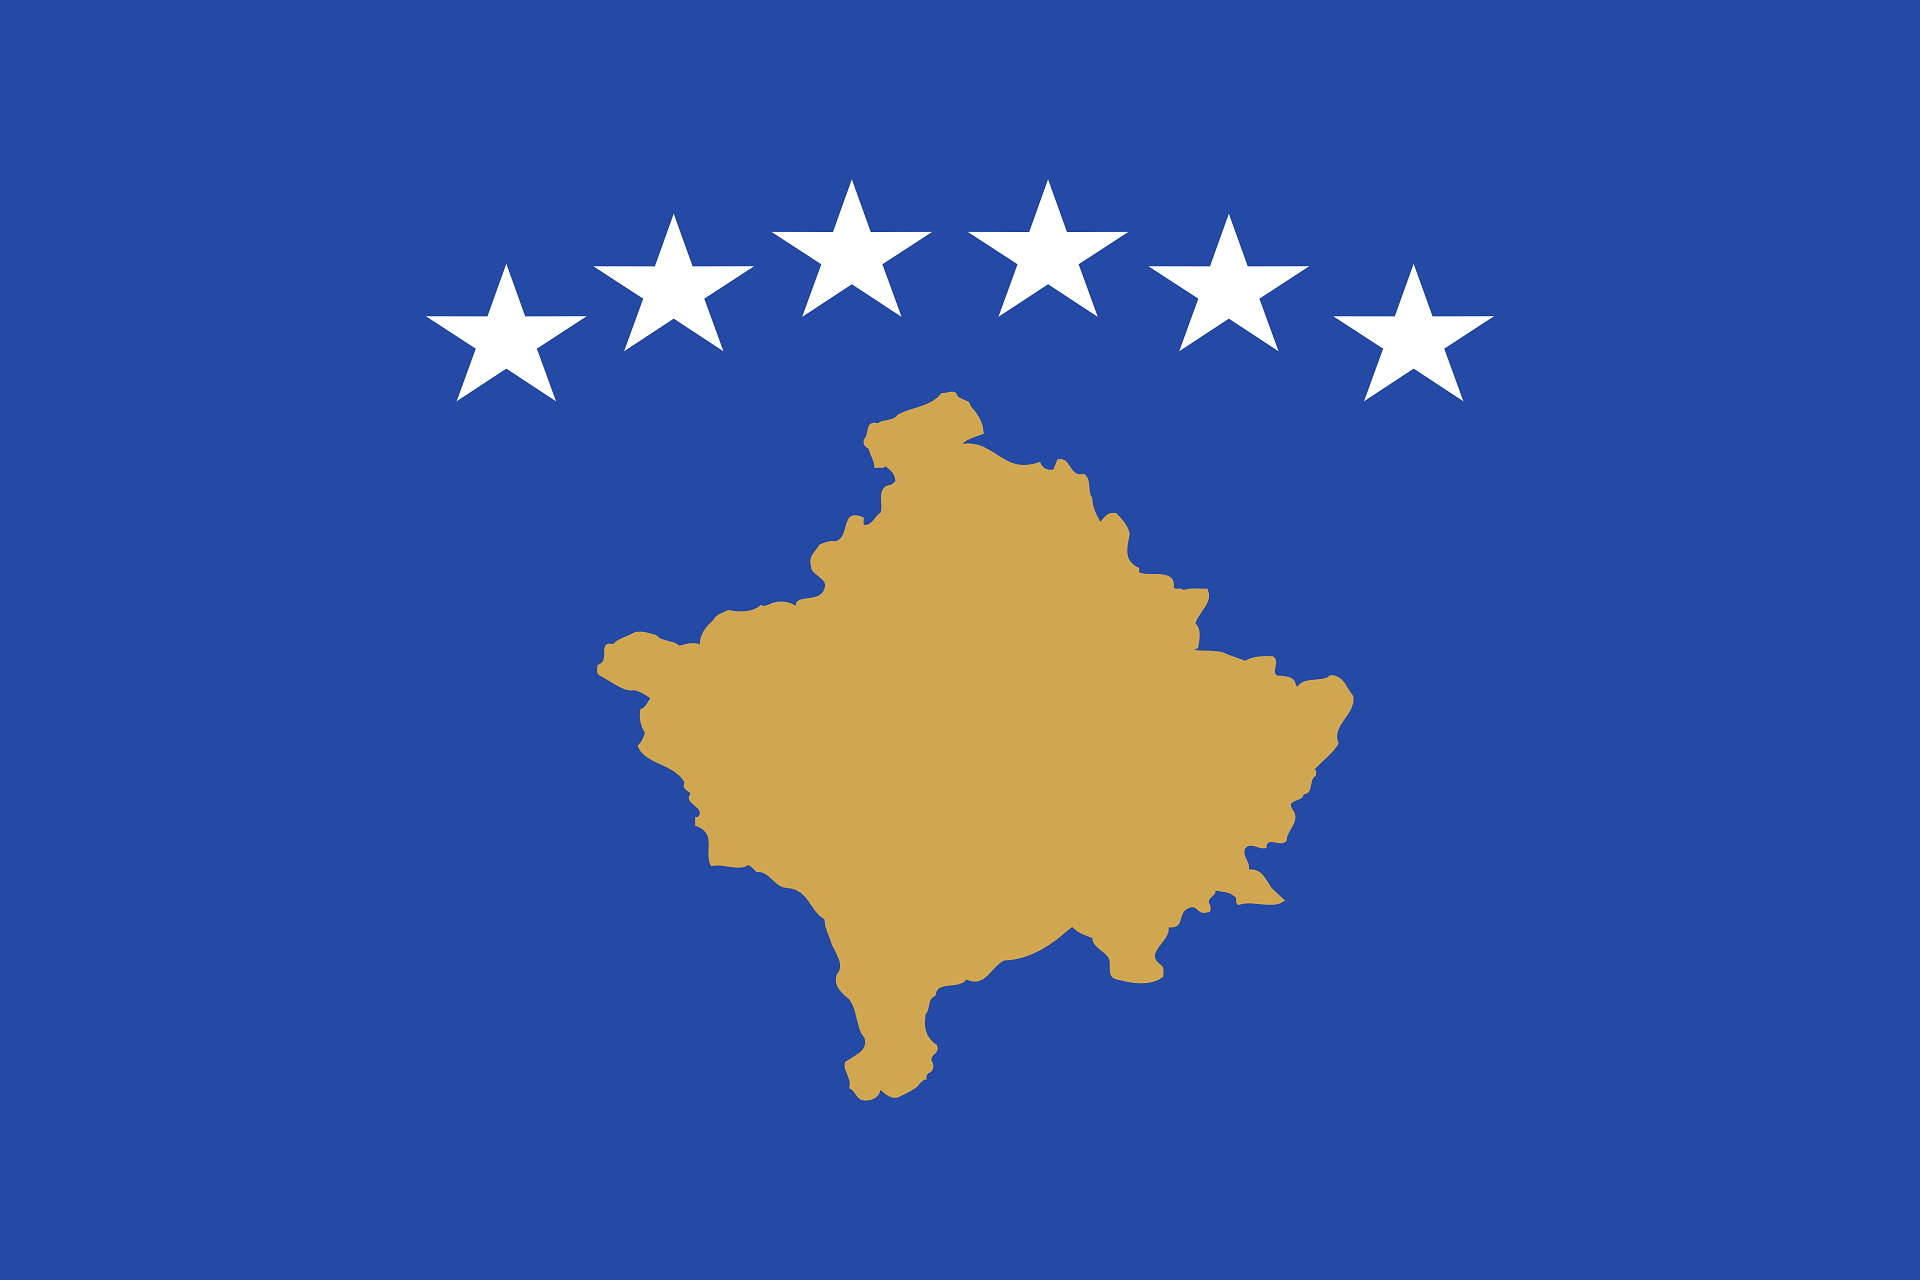 Czech Albanian Camber of Commerce  - Kosovo flag